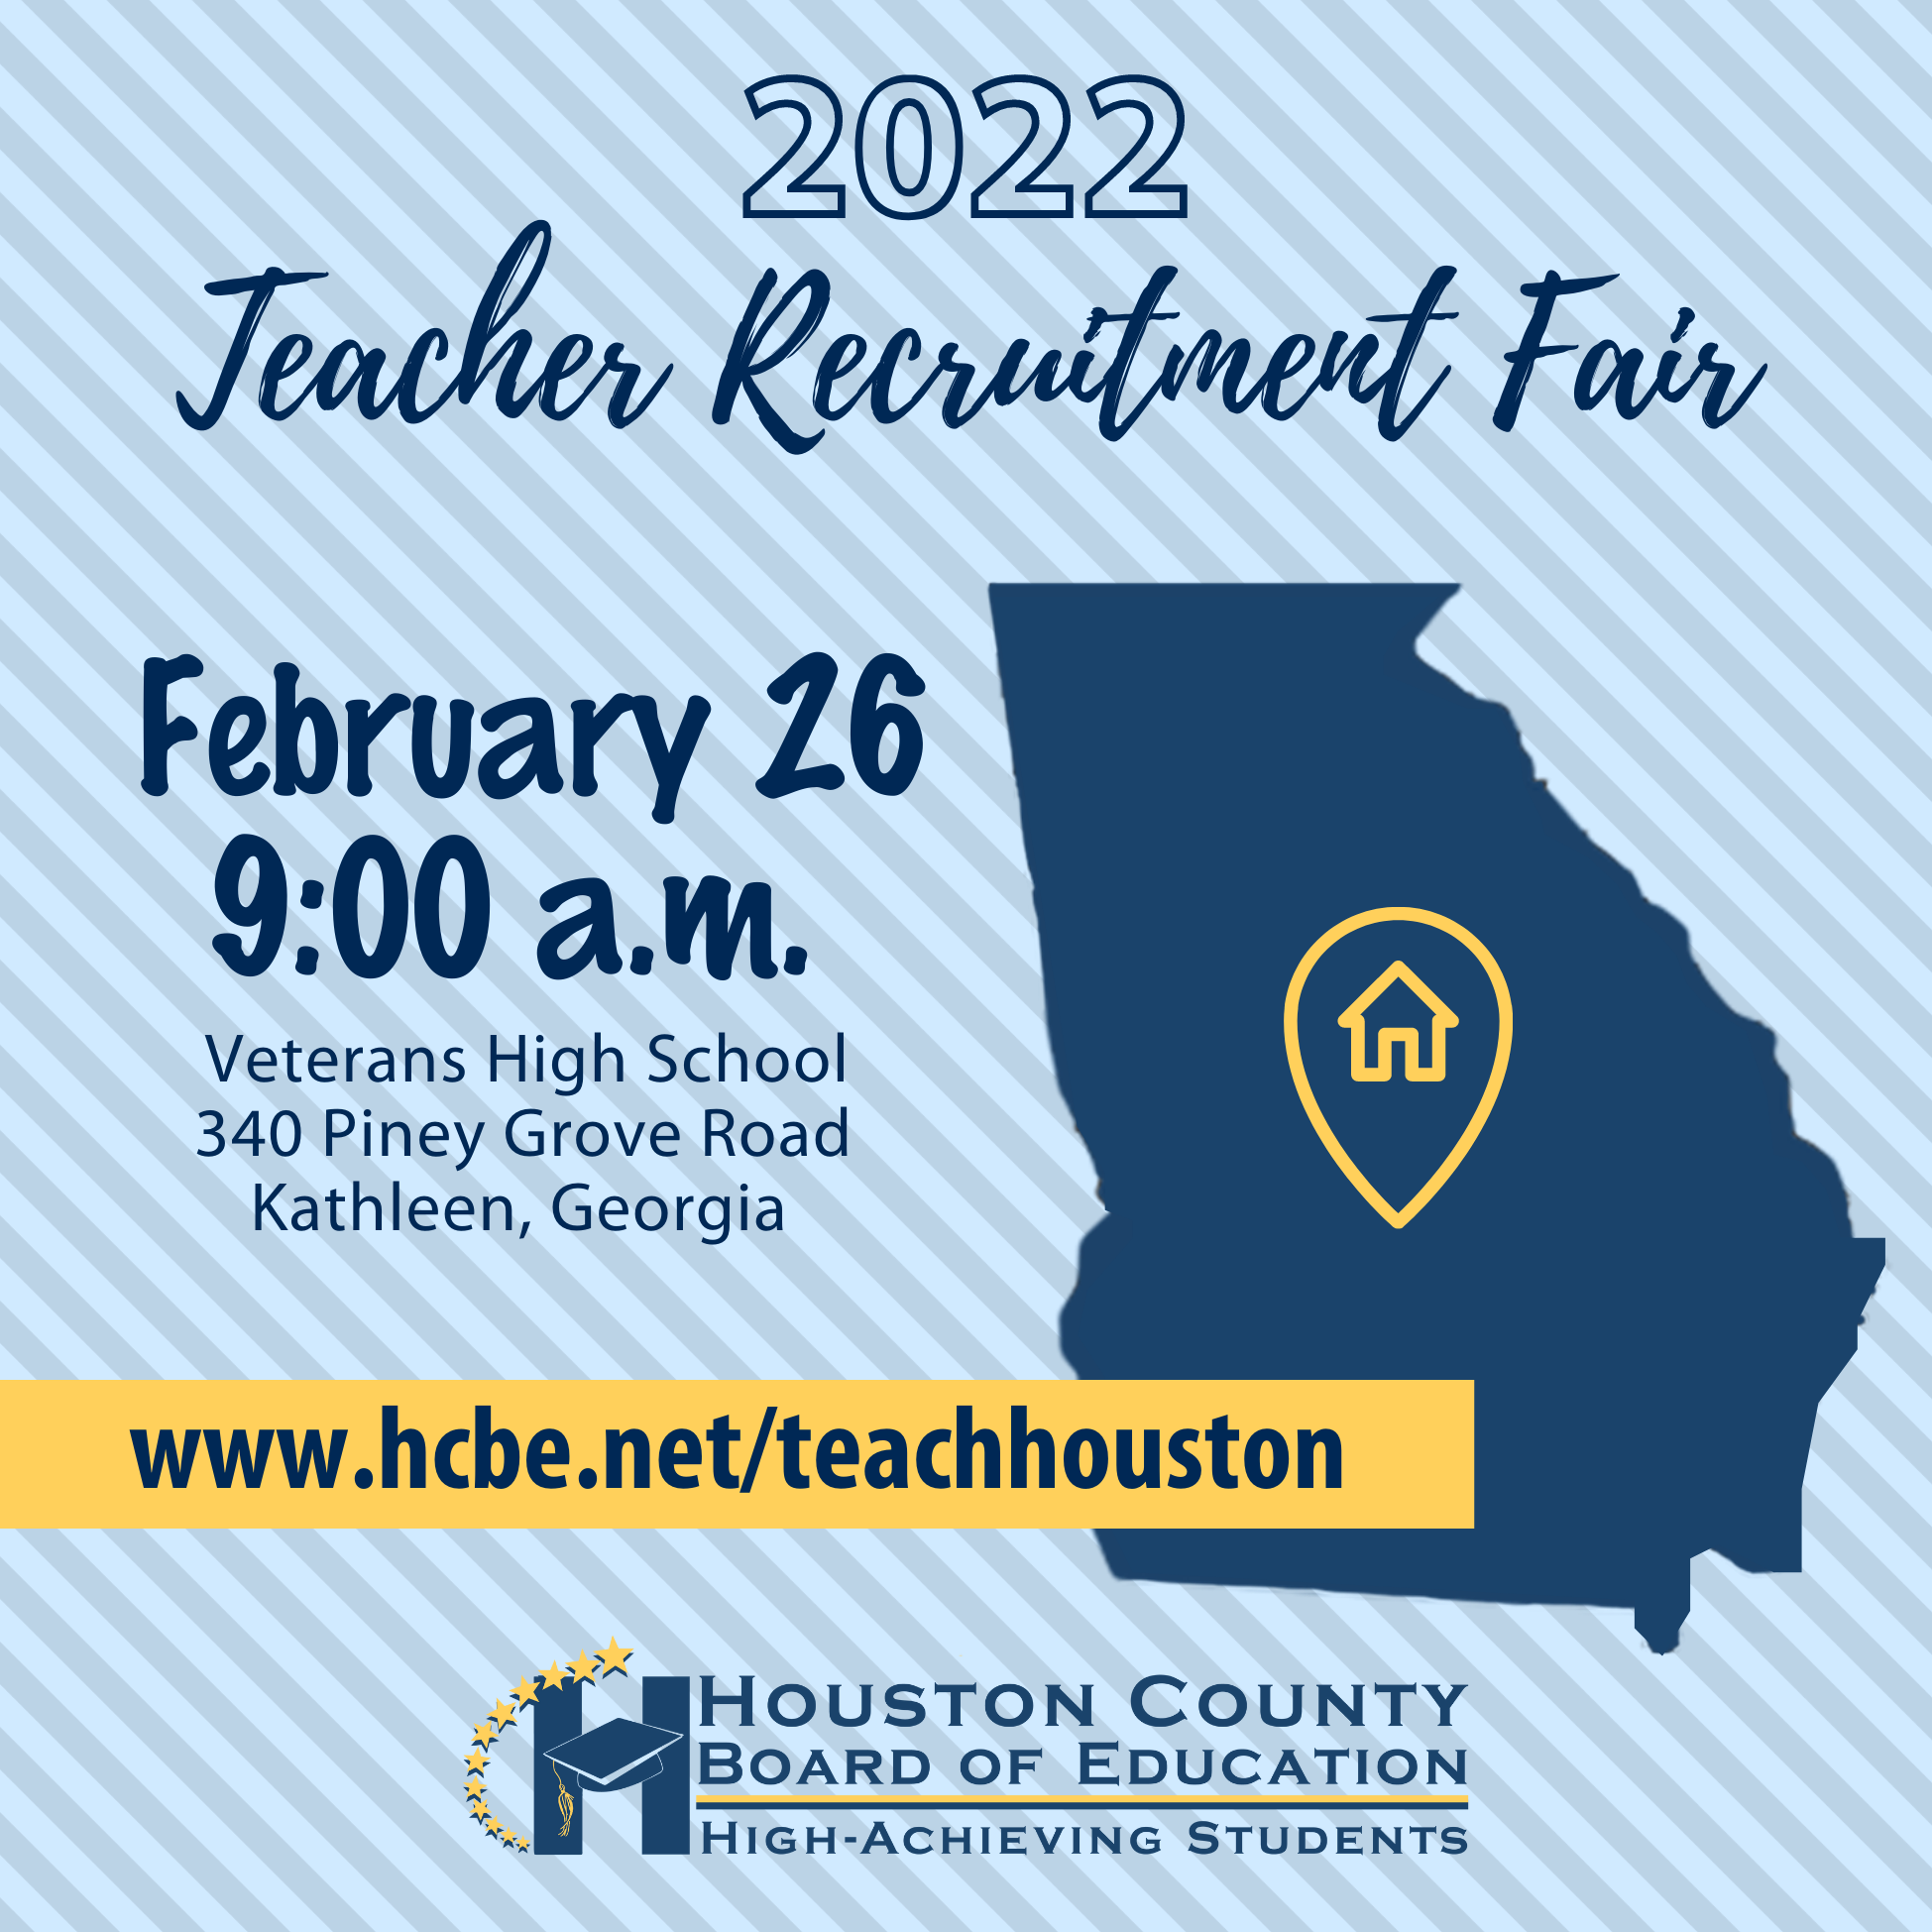 Teacher Recruitment Fair - February 26